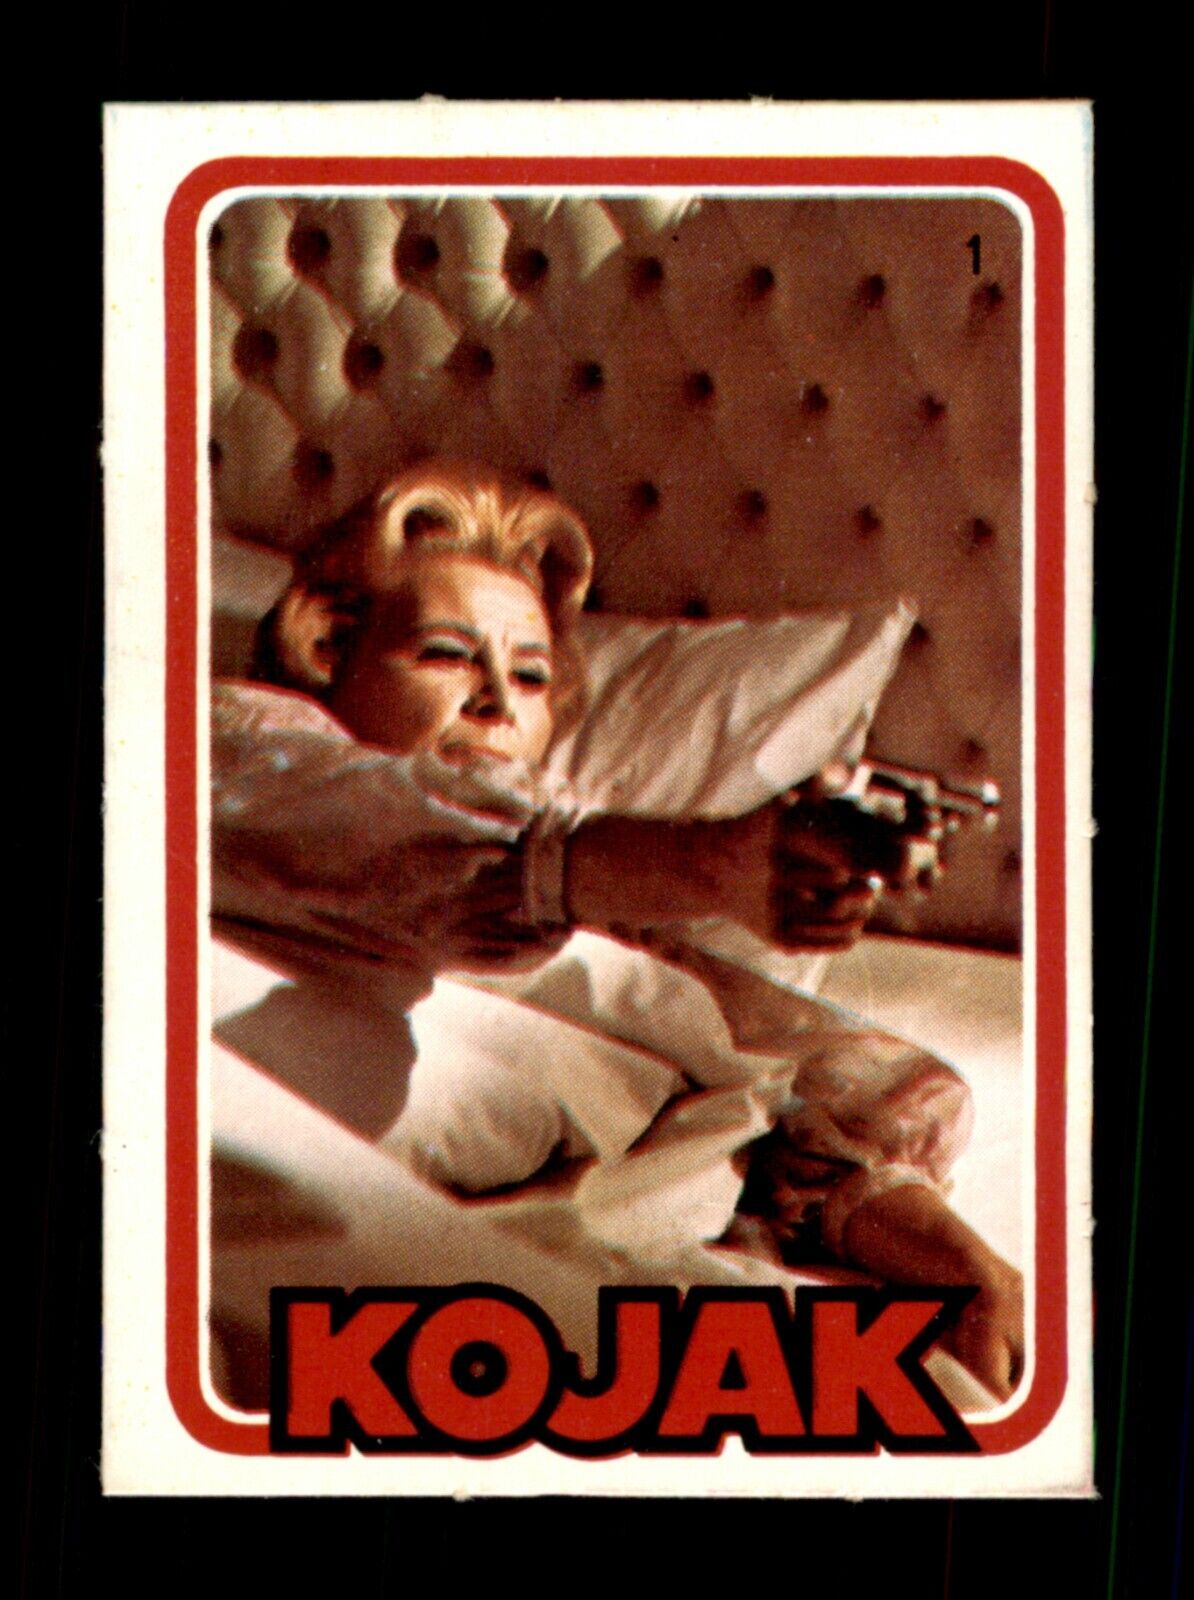 1975 Monty Gum  KOJAK TRADING CARDS. SEE DROP DOWN MENU